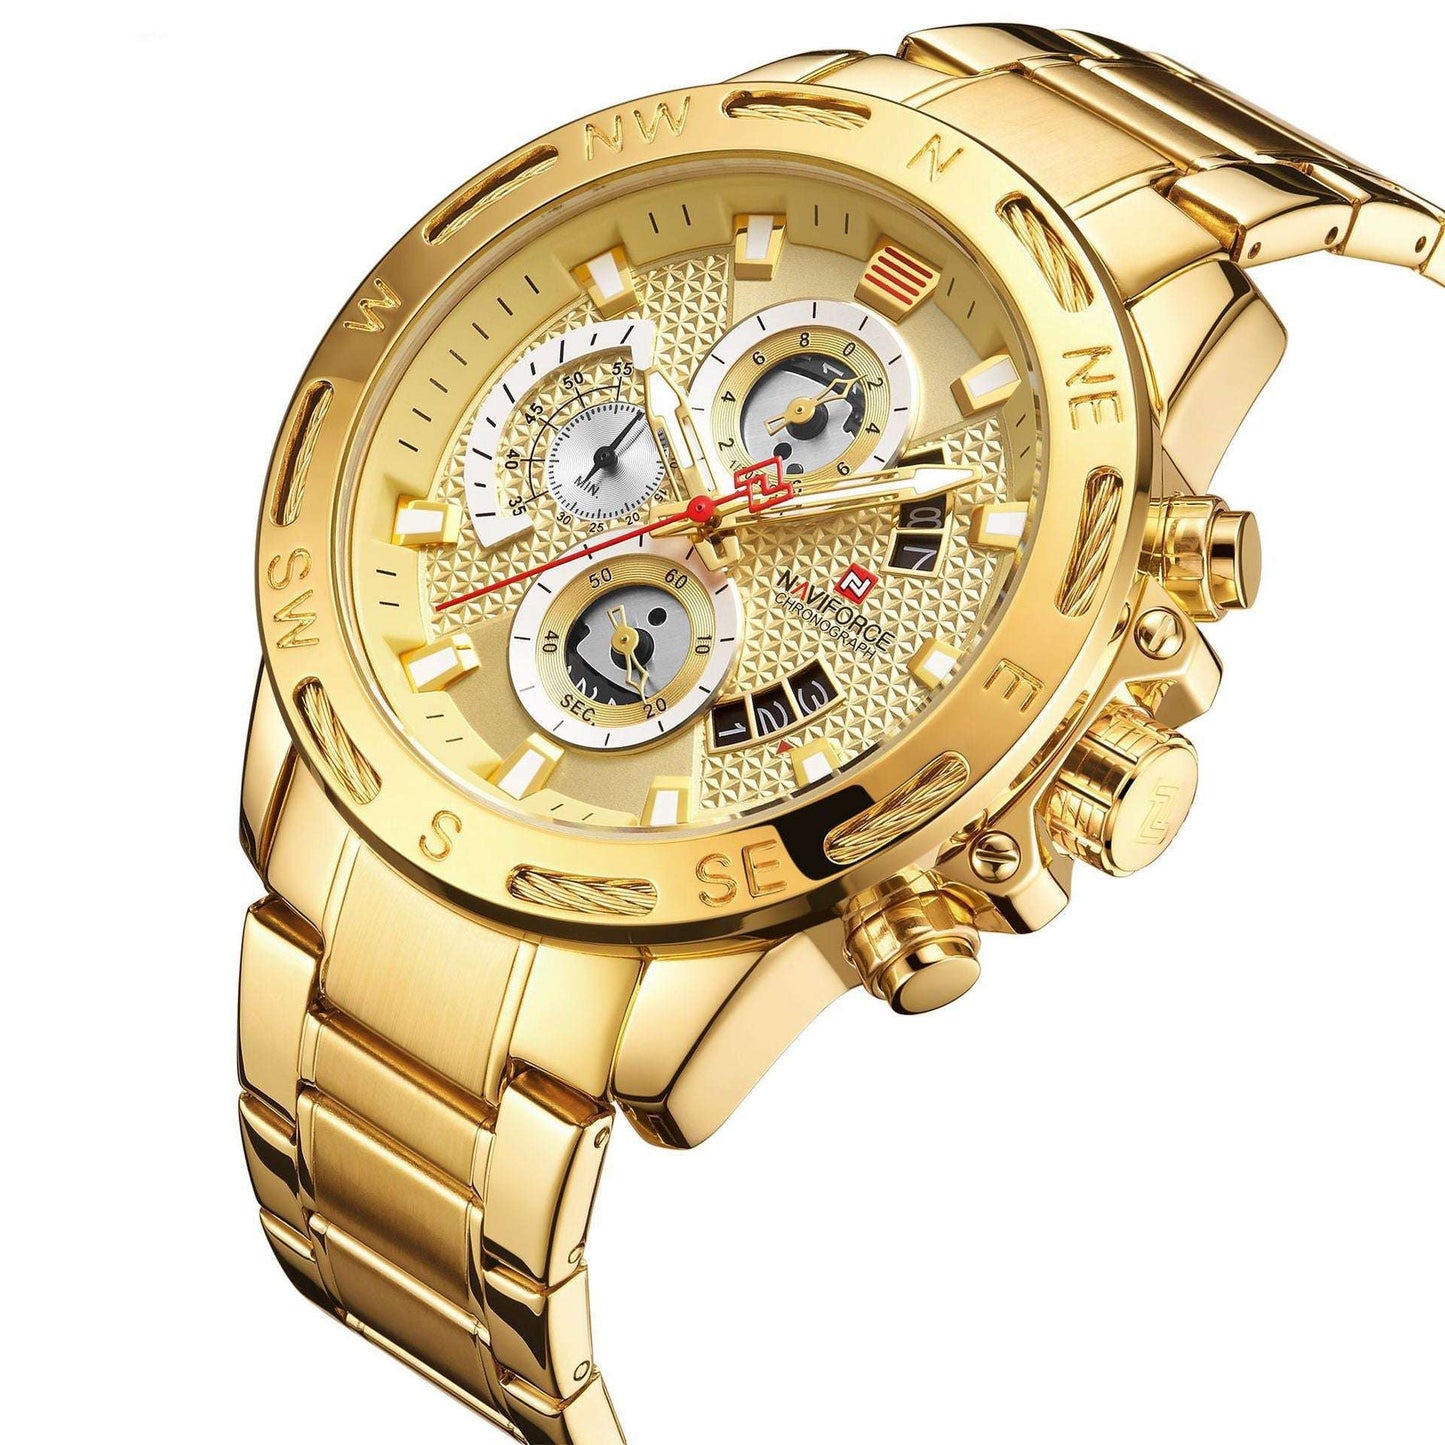 Multifunctional Quartz Watch, Stylish Men's Watch, Waterproof Men's Watch - available at Sparq Mart